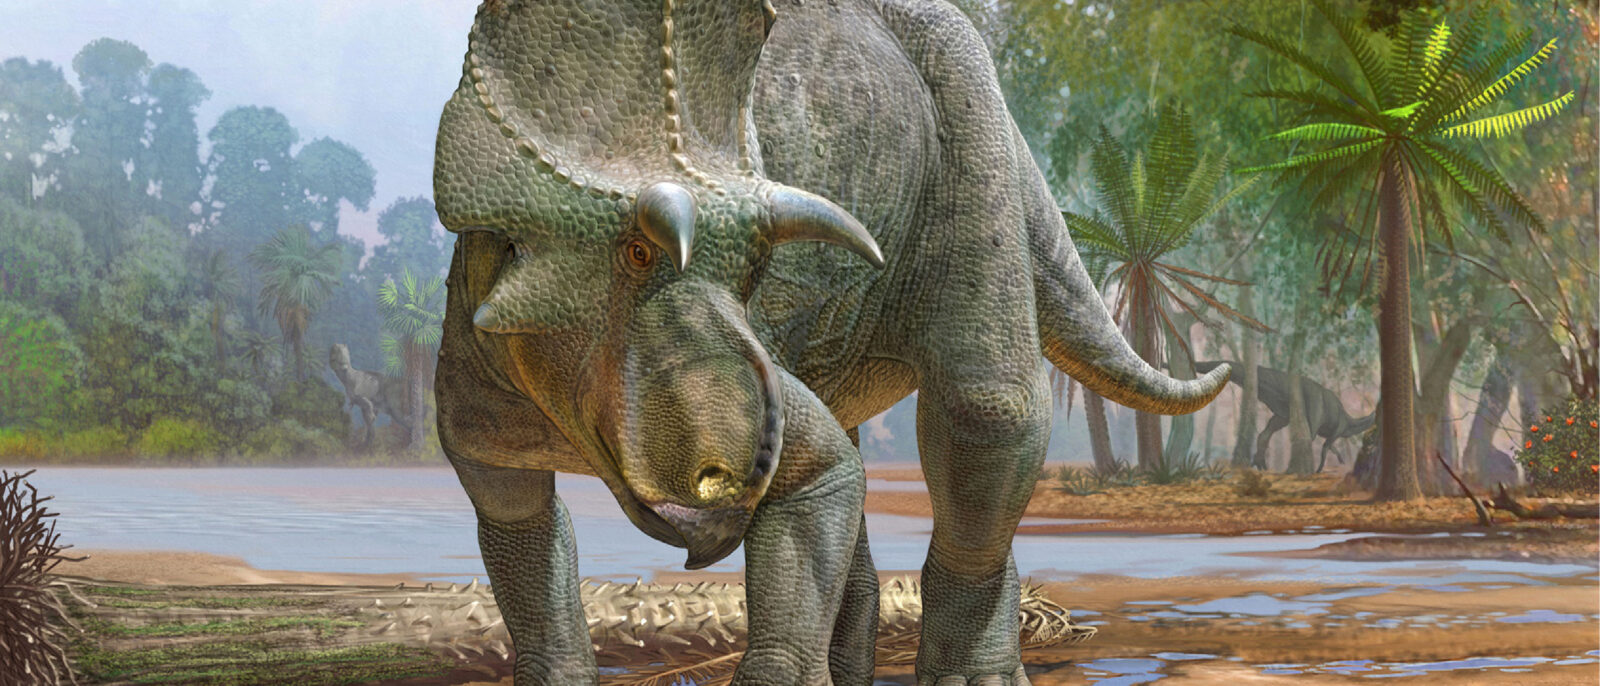 HU professor helps name, describe new horned dinosaur discovery